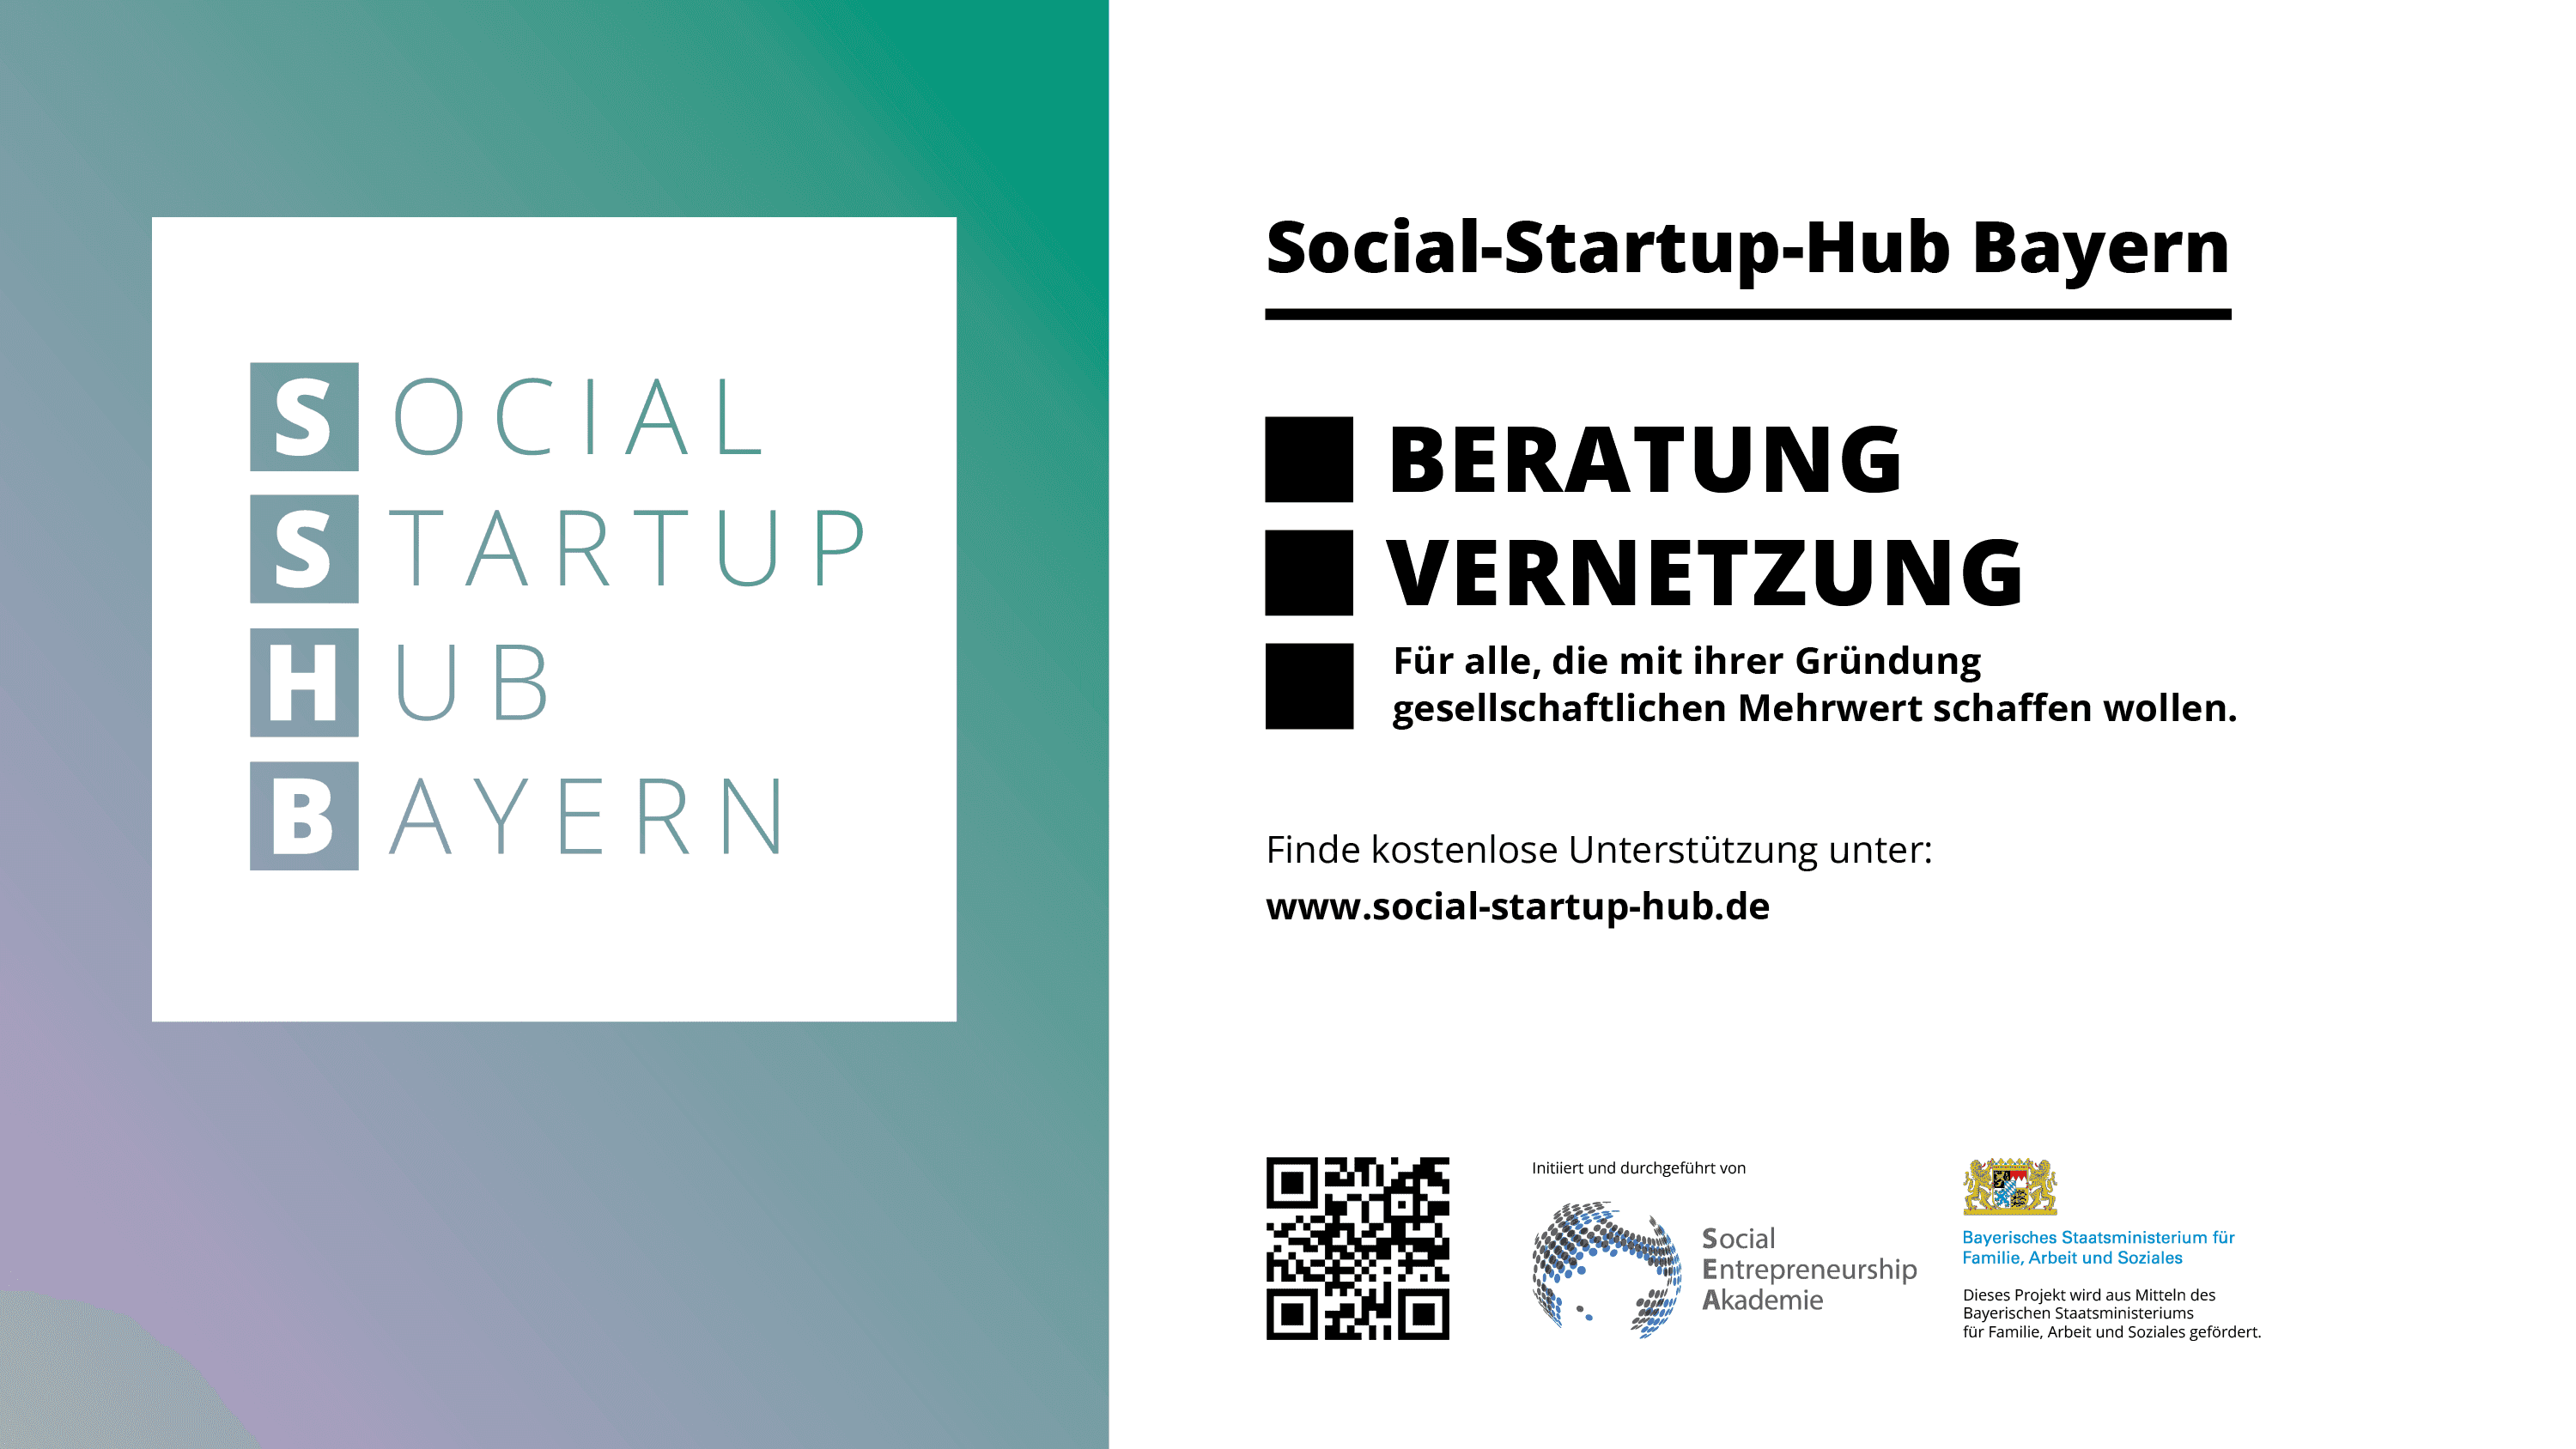 Bild oder Logo des Eintrags Social-Startup-Hub